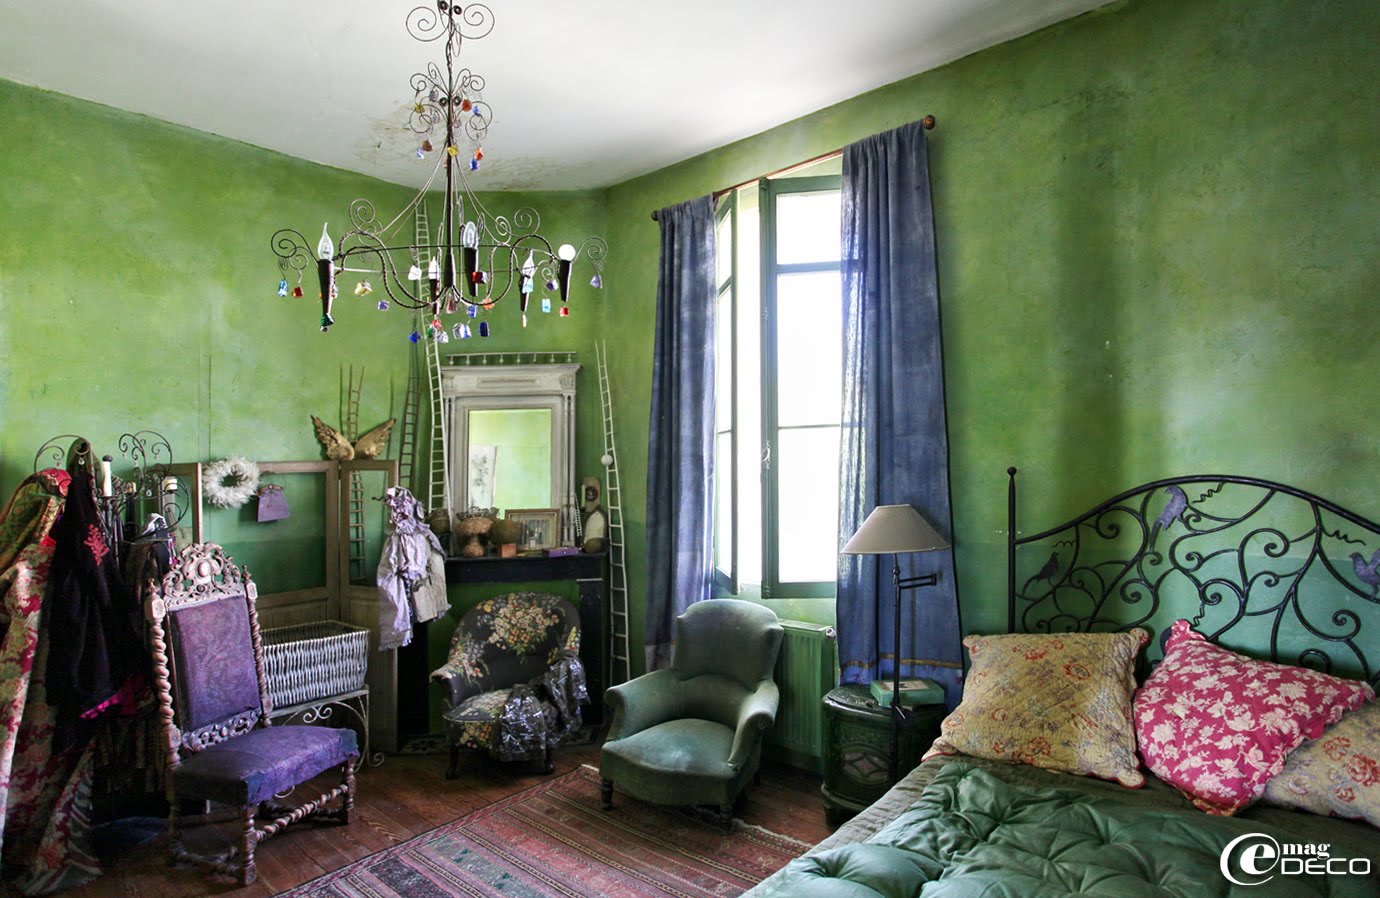 Chambre à coucher chez Miss Clara peint dans un camaïeu de vert